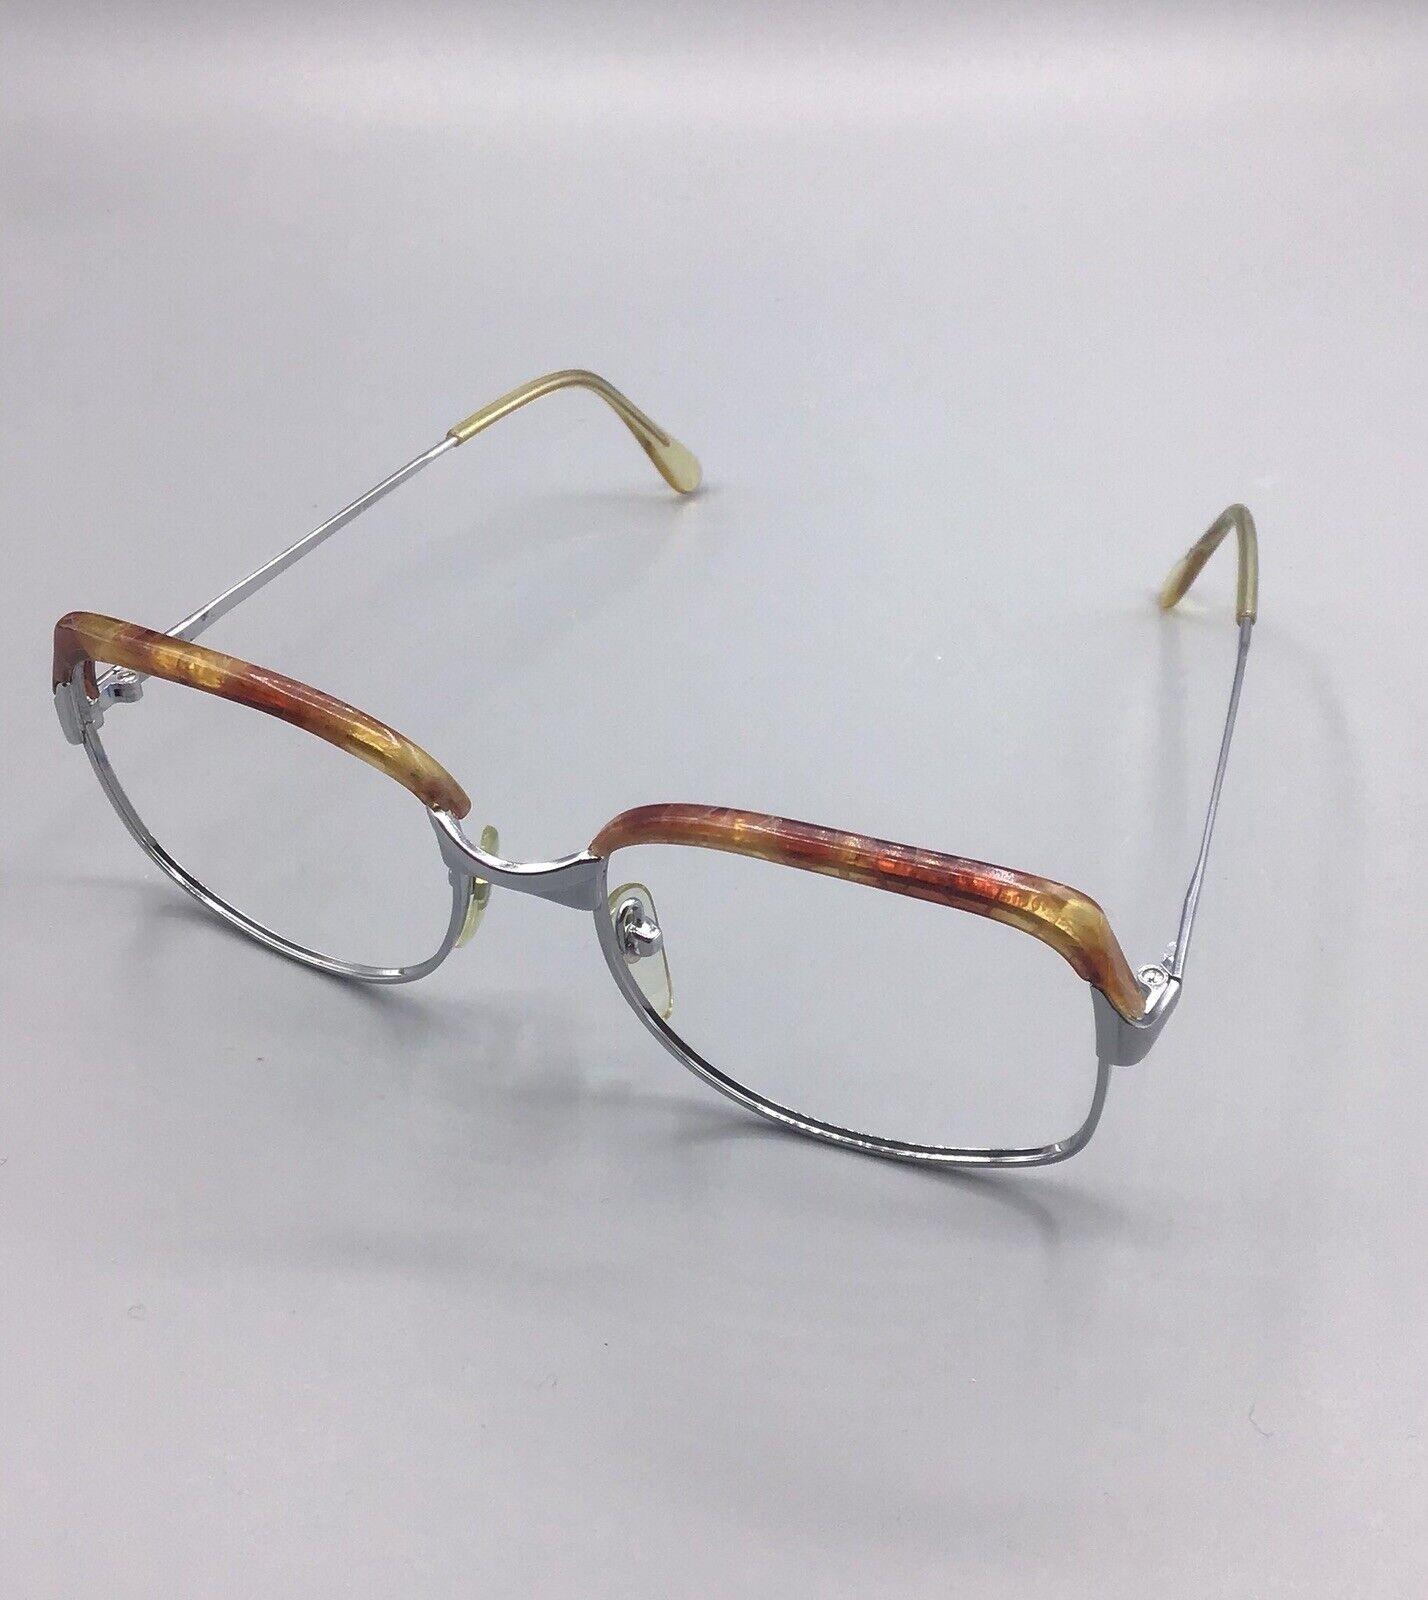 Marcolin occhiale vintage Eyewear frame Italy Brillen lunettes model 832